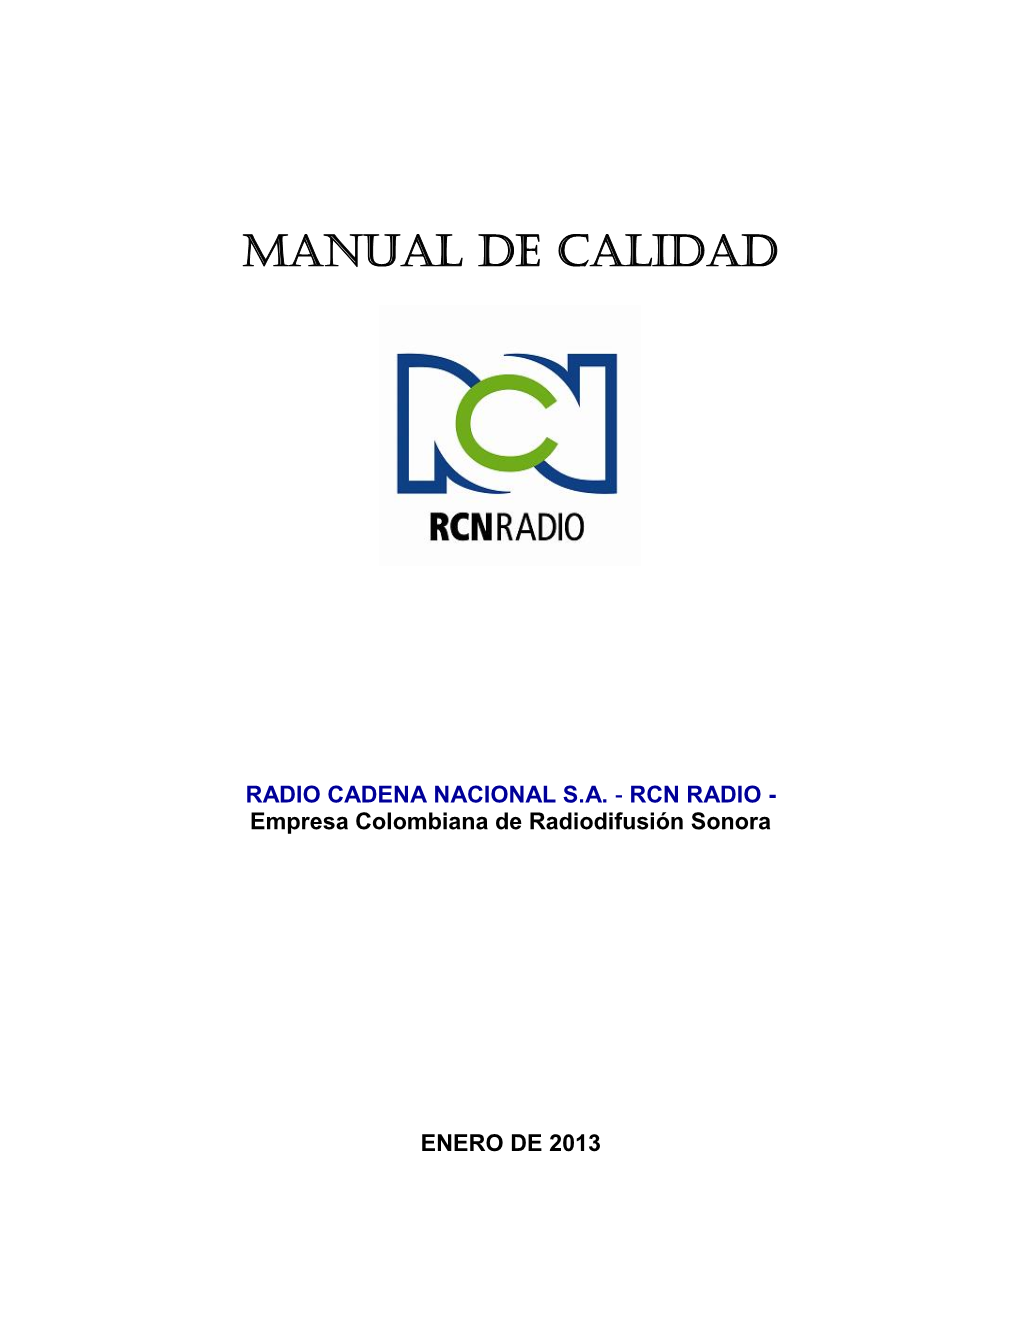 MANUAL DE CALIDAD CIUDADES RCN 2013.Pdf